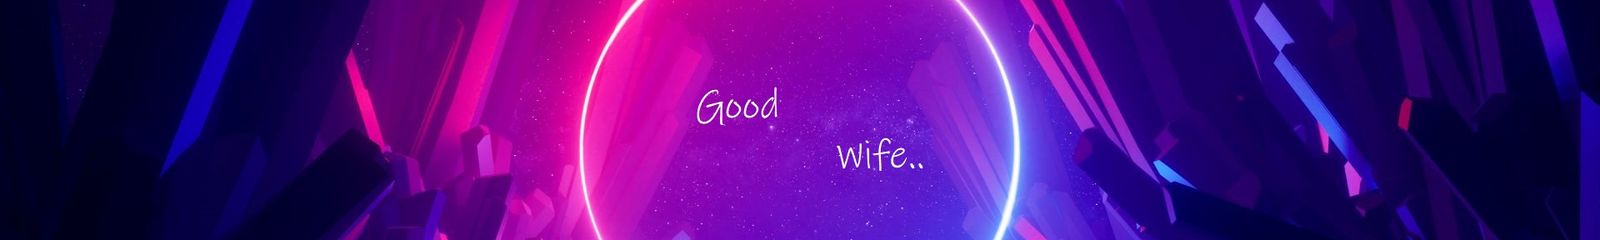 Good Wife 777